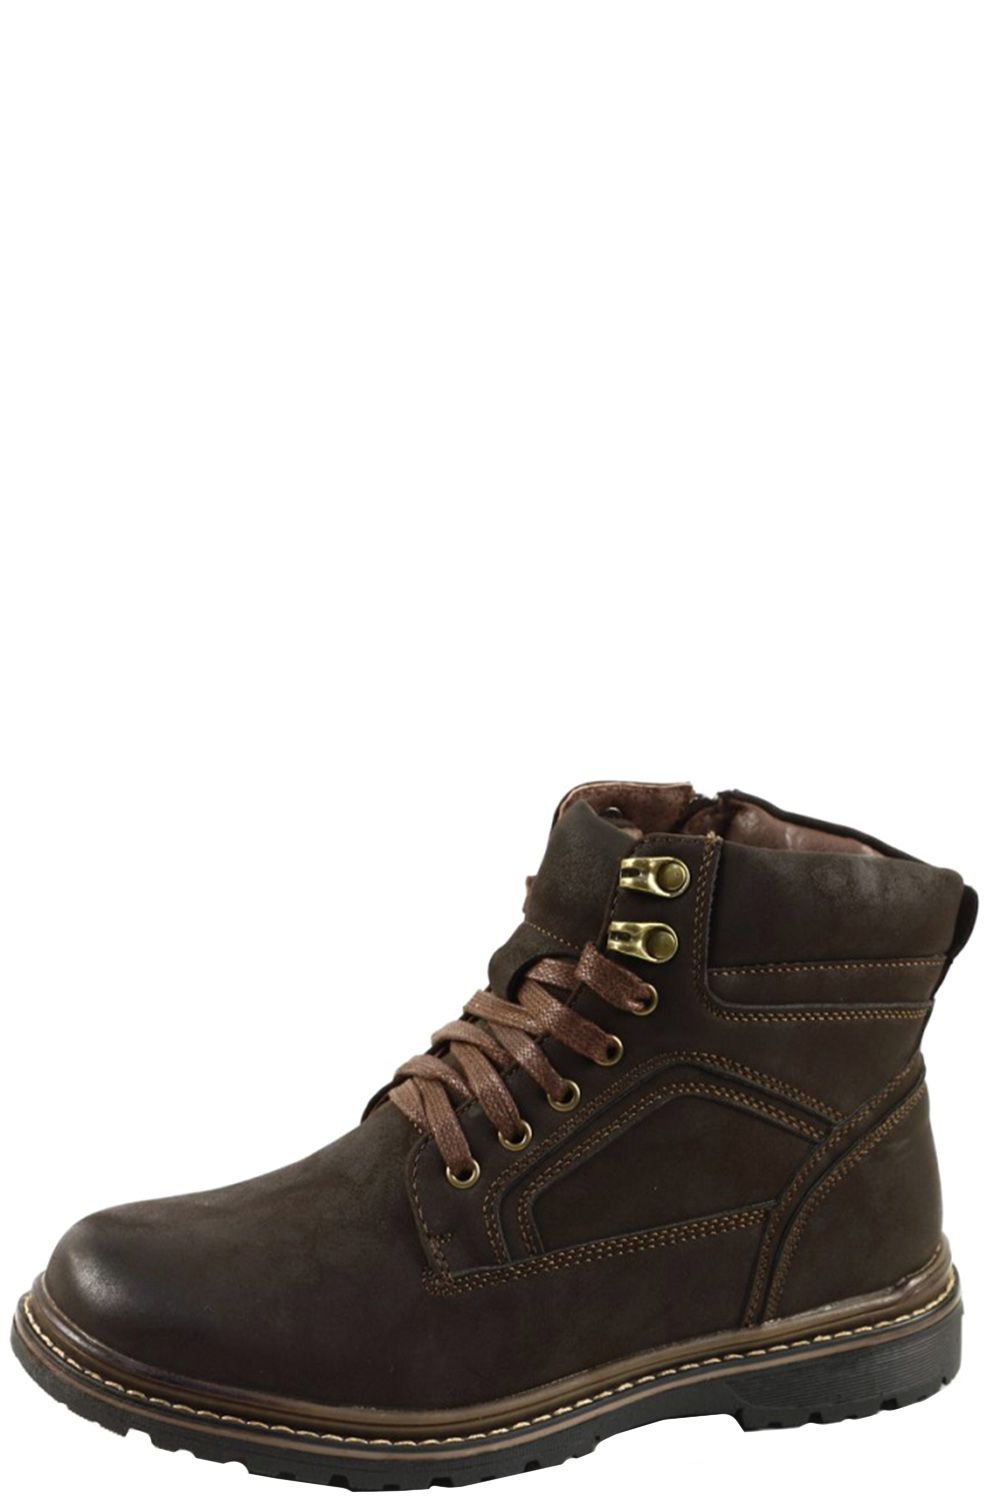 Ботинки Tesoro, размер 41, цвет коричневый 168622/01-12 - фото 1